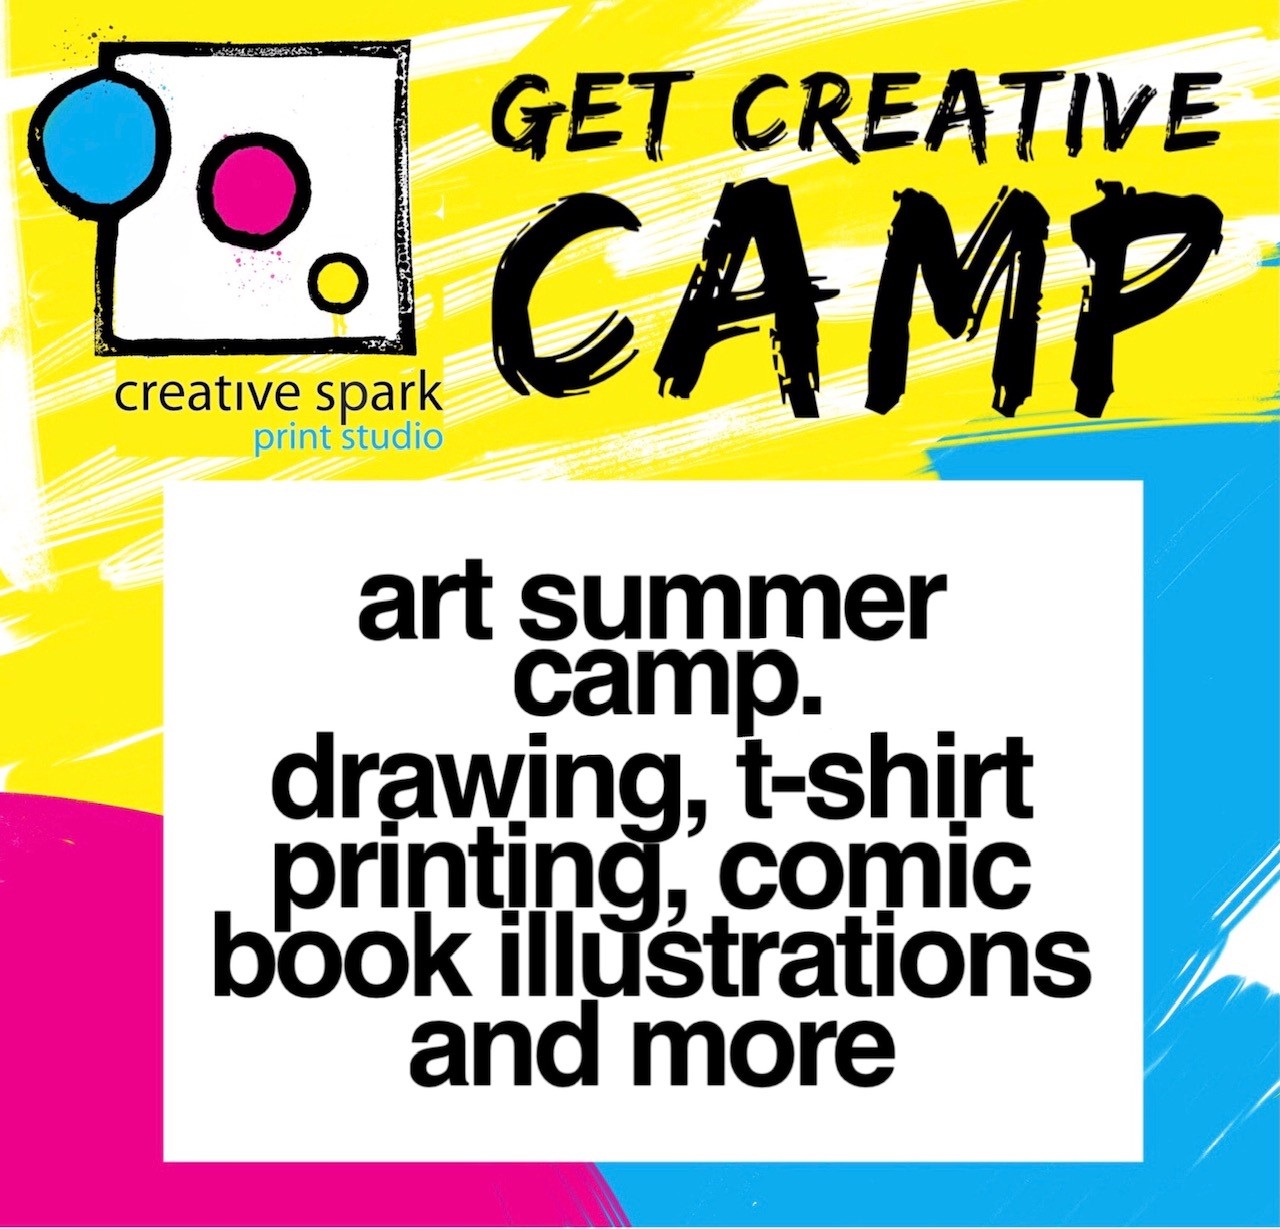 Get Creative August Camp